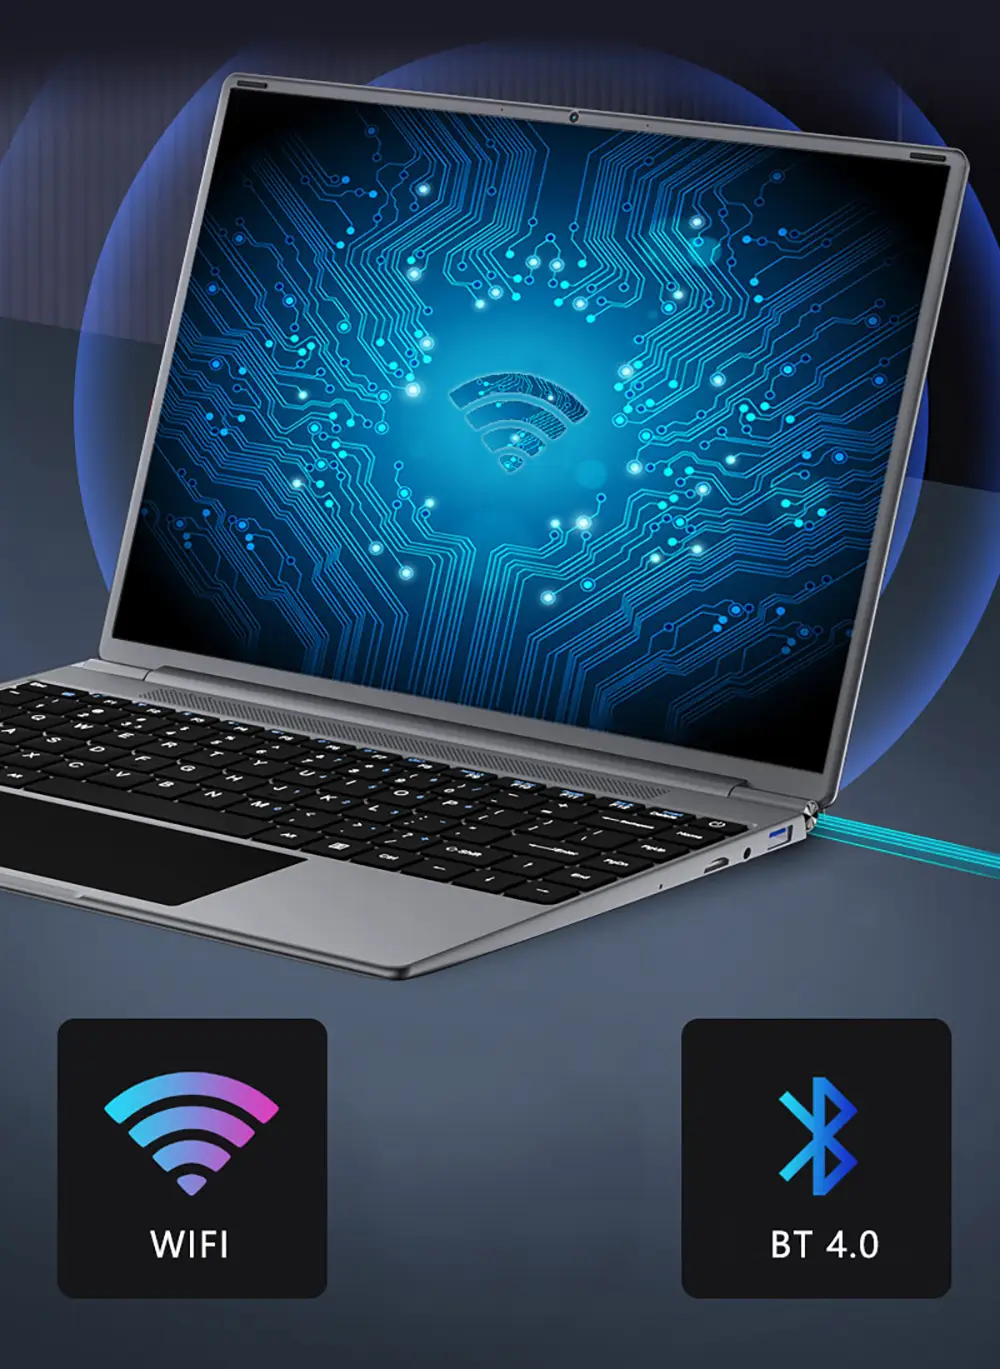 KUU Yobookm 13.5-inch 3K IPS Screen Laptop Intel Celeron N4020 processor SSD Laptop Windows 10 16